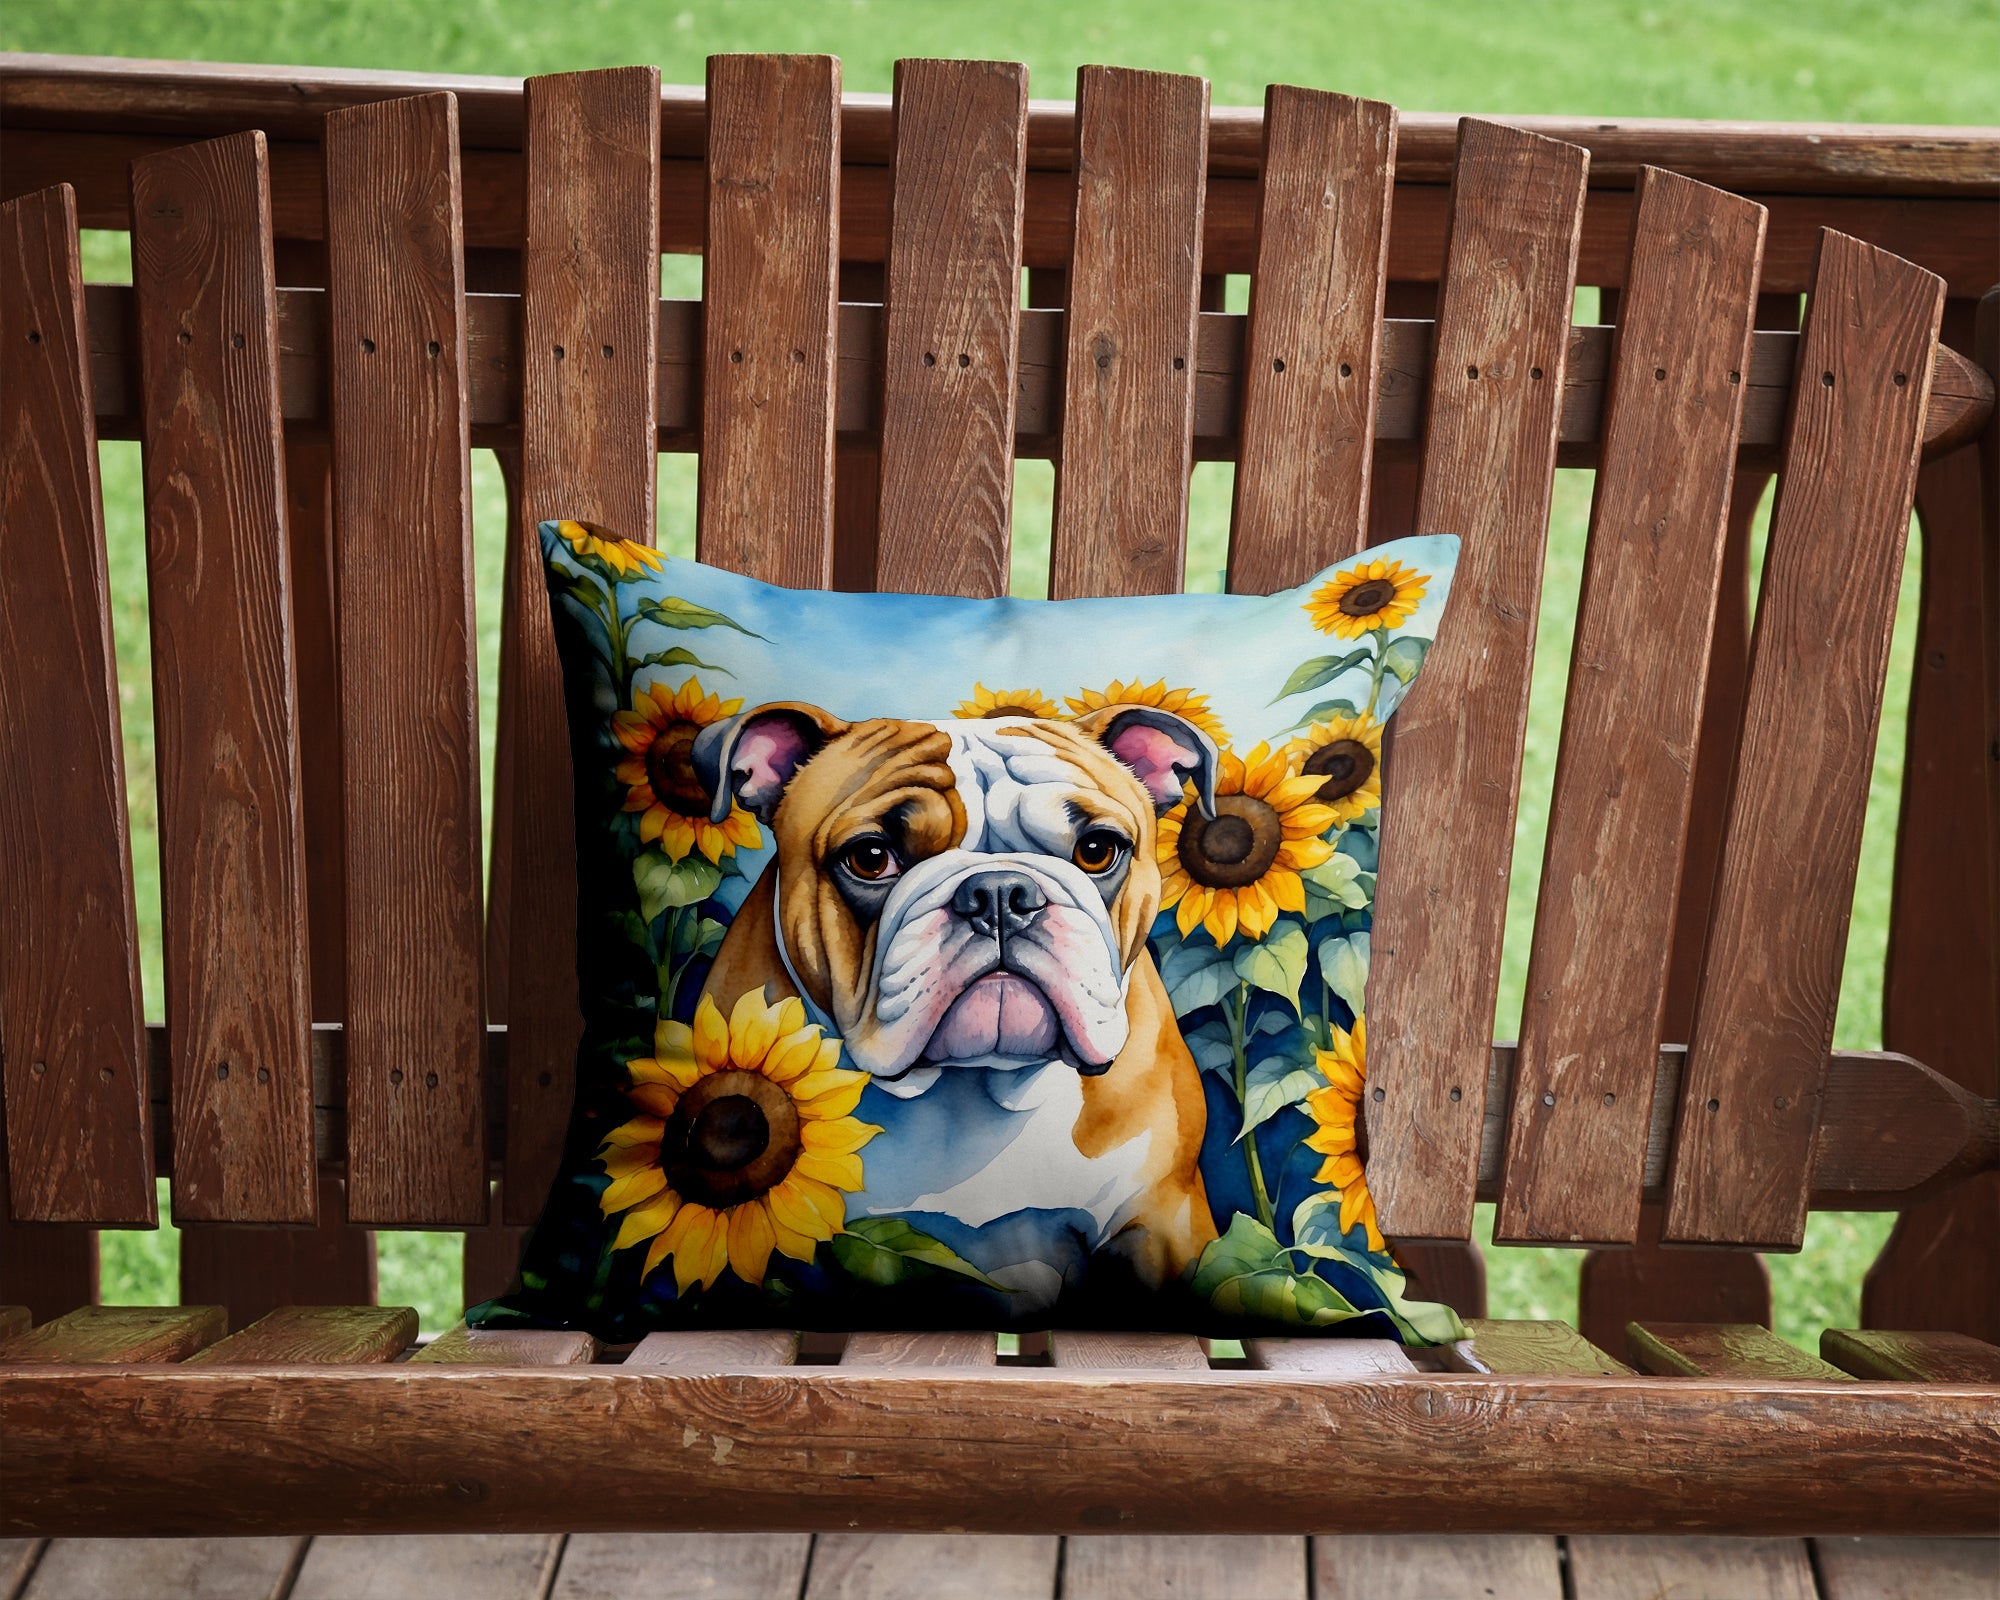 Buy this English Bulldog in Sunflowers Throw Pillow